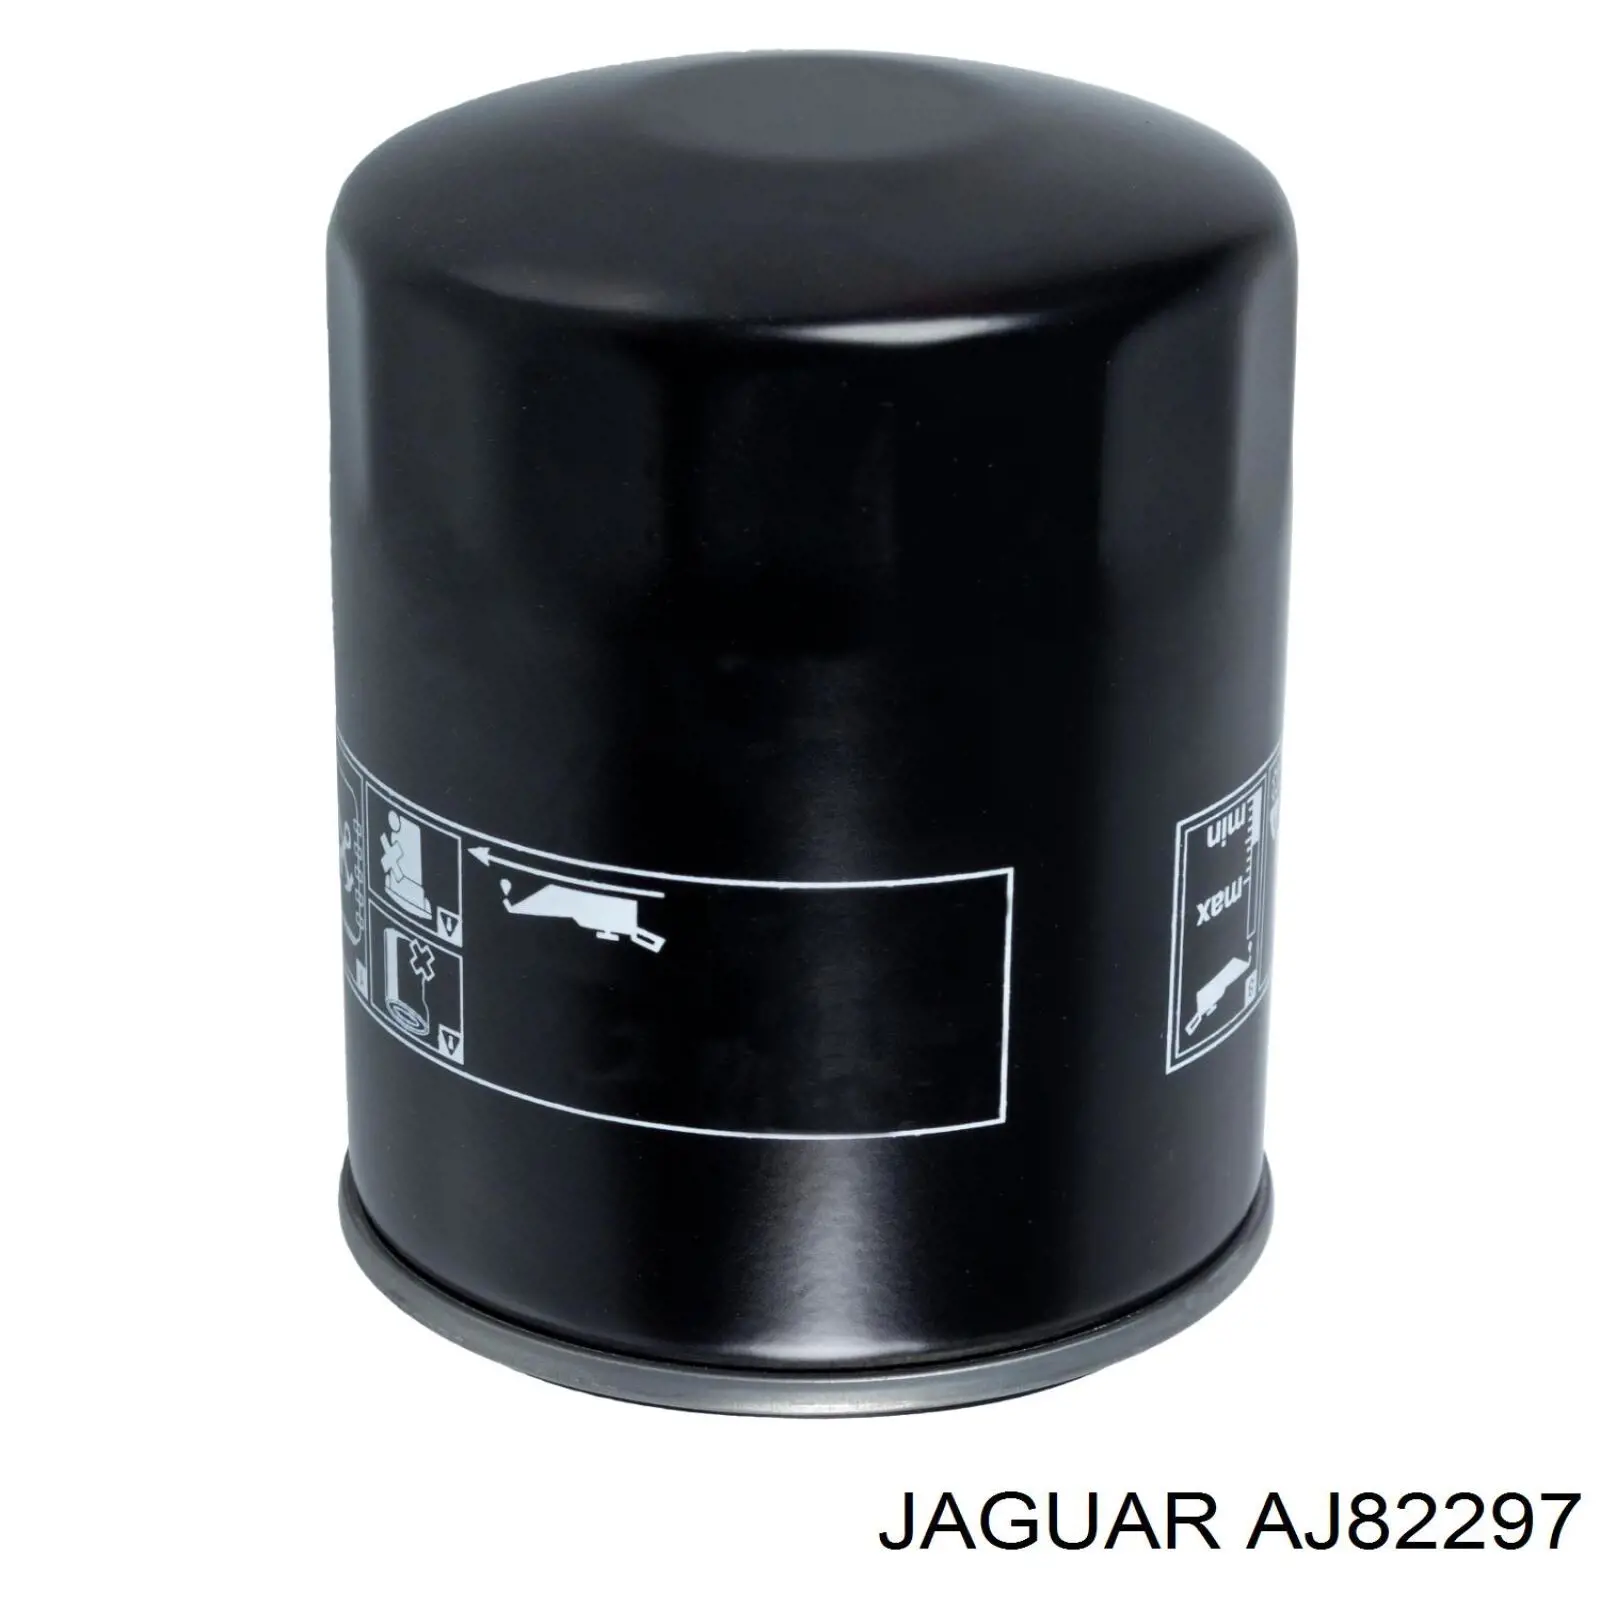 AJ82297 Jaguar filtro de aceite